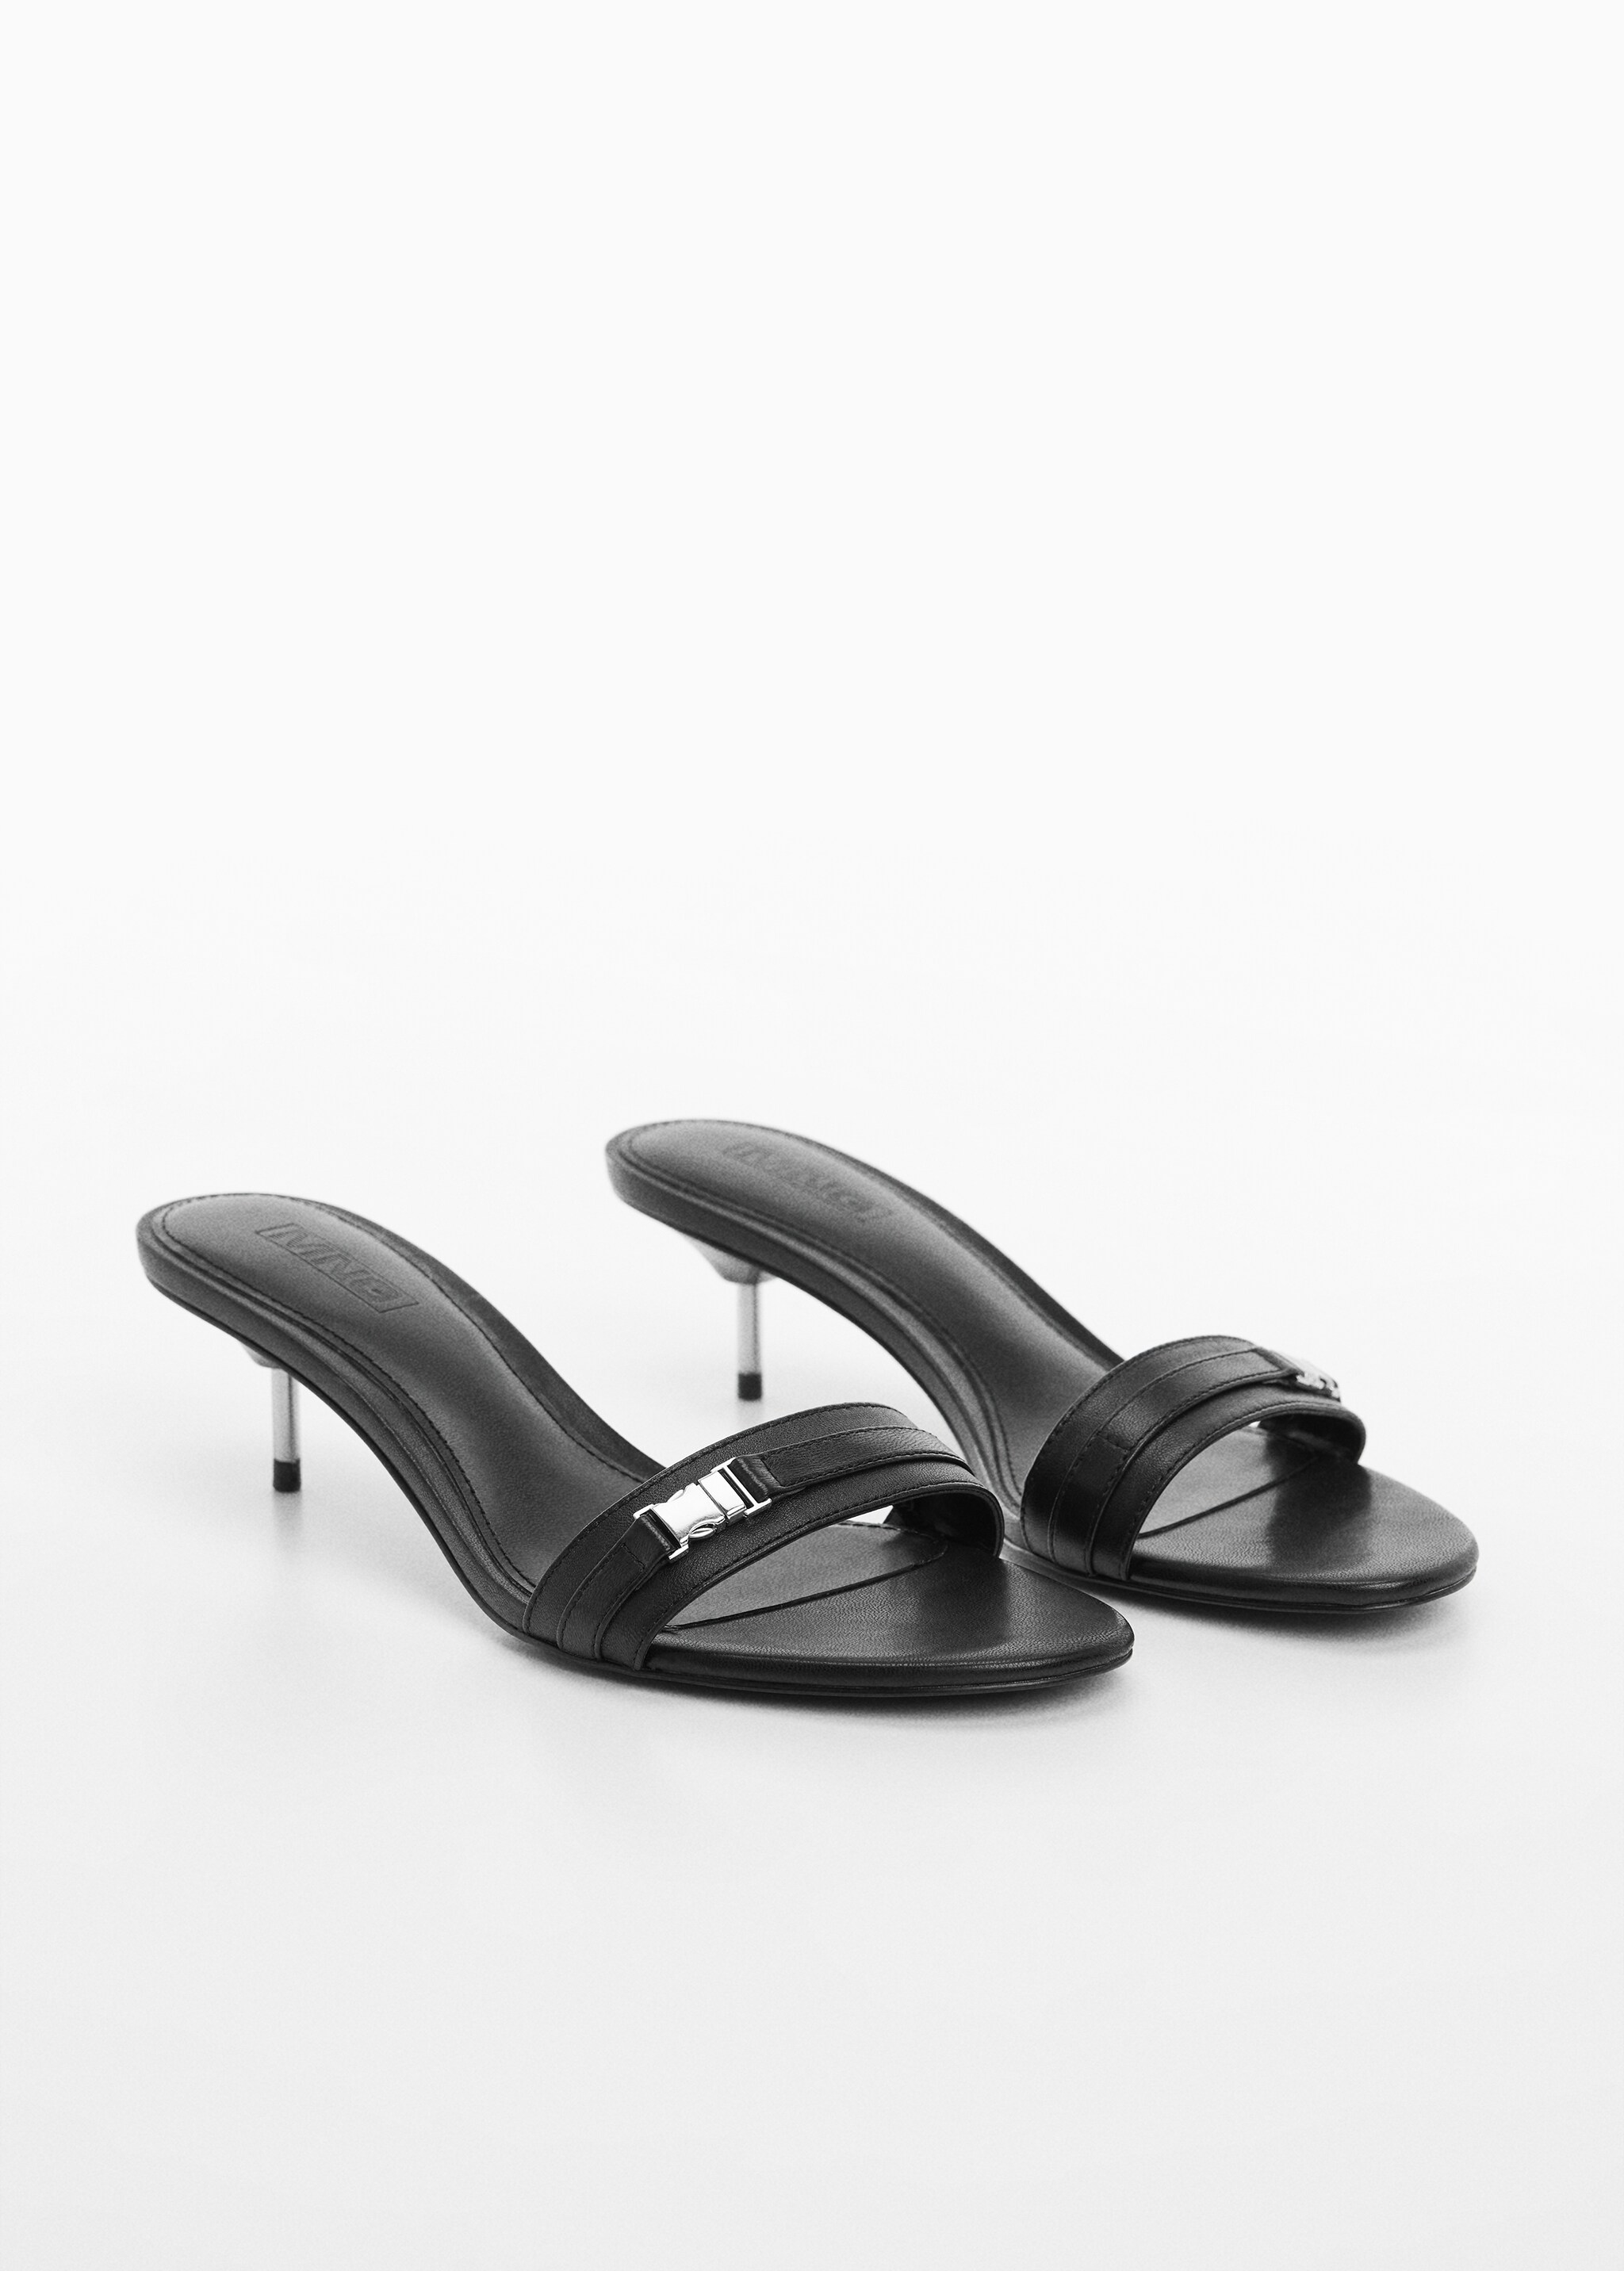 Leather sandals with metallic heel - Medium plane